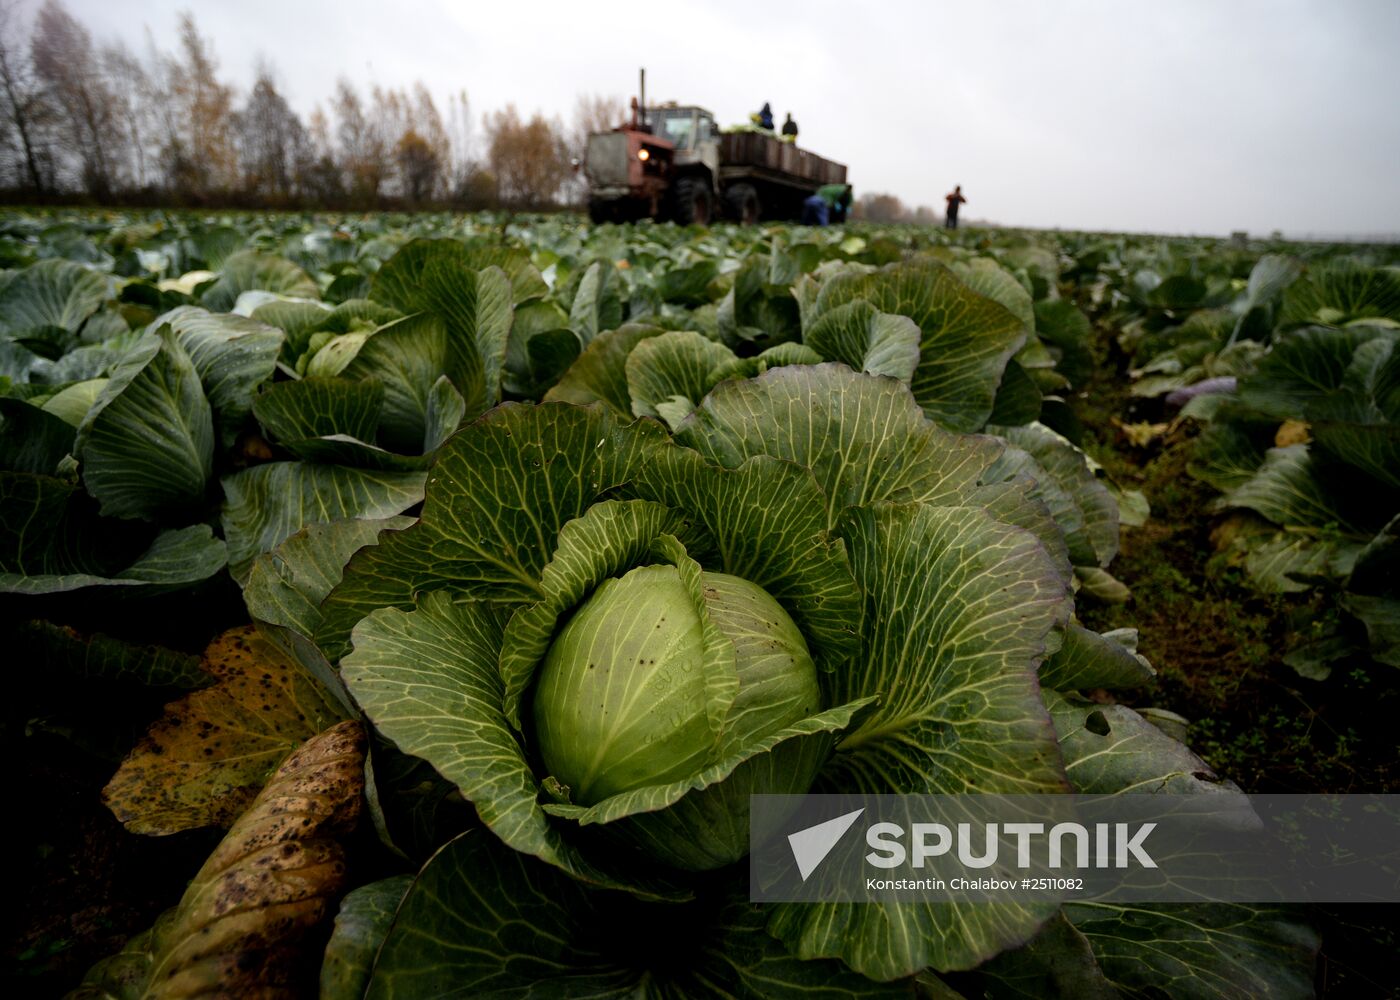 Harvesting cabbage in Novgorod Region